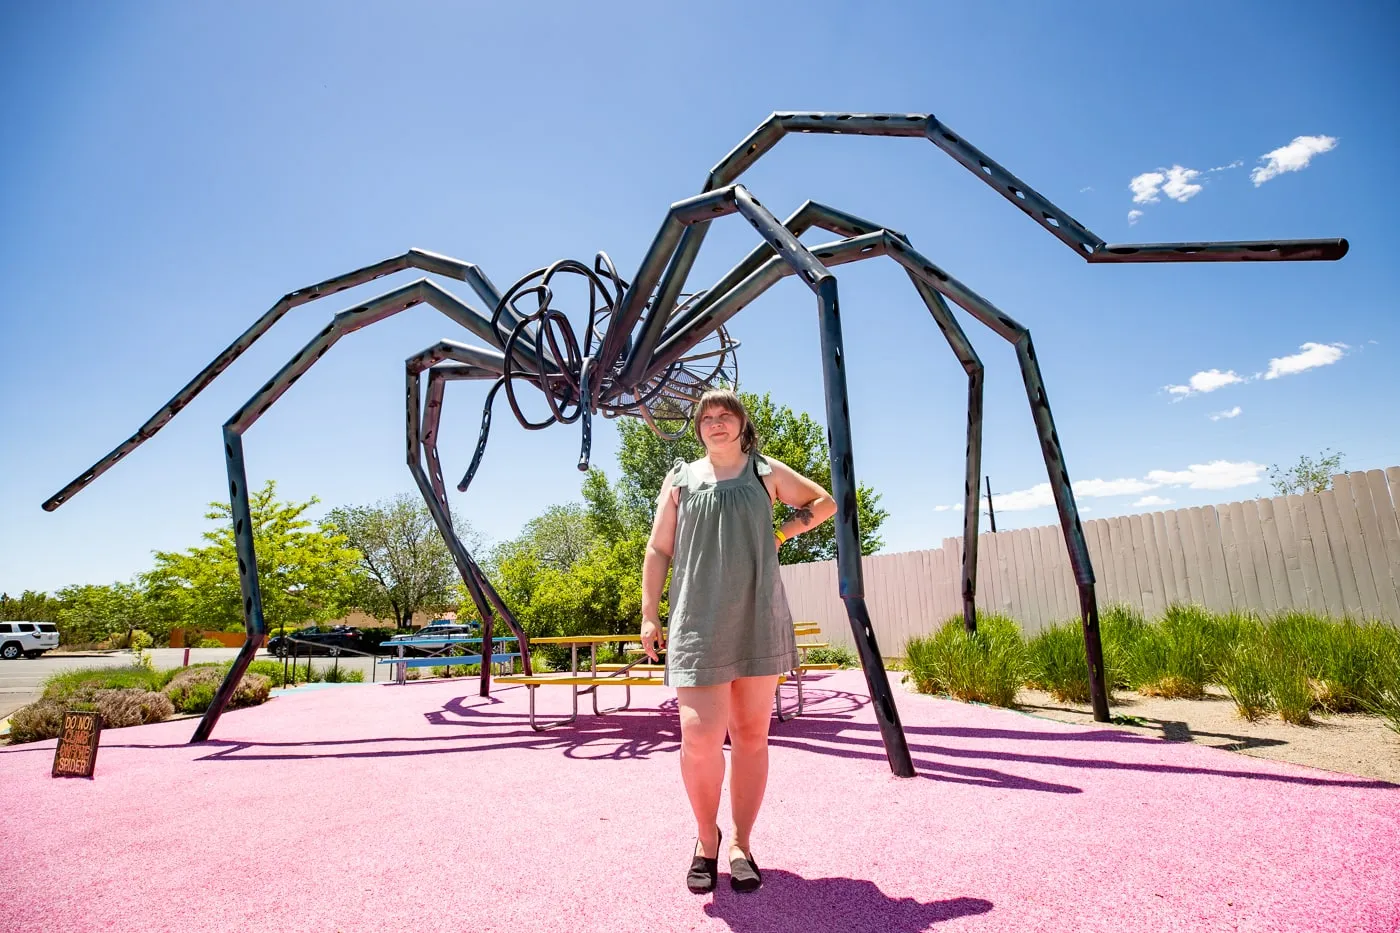 TaranTula - Giant Spider at Meow Wolf in Santa Fe, New Mexico